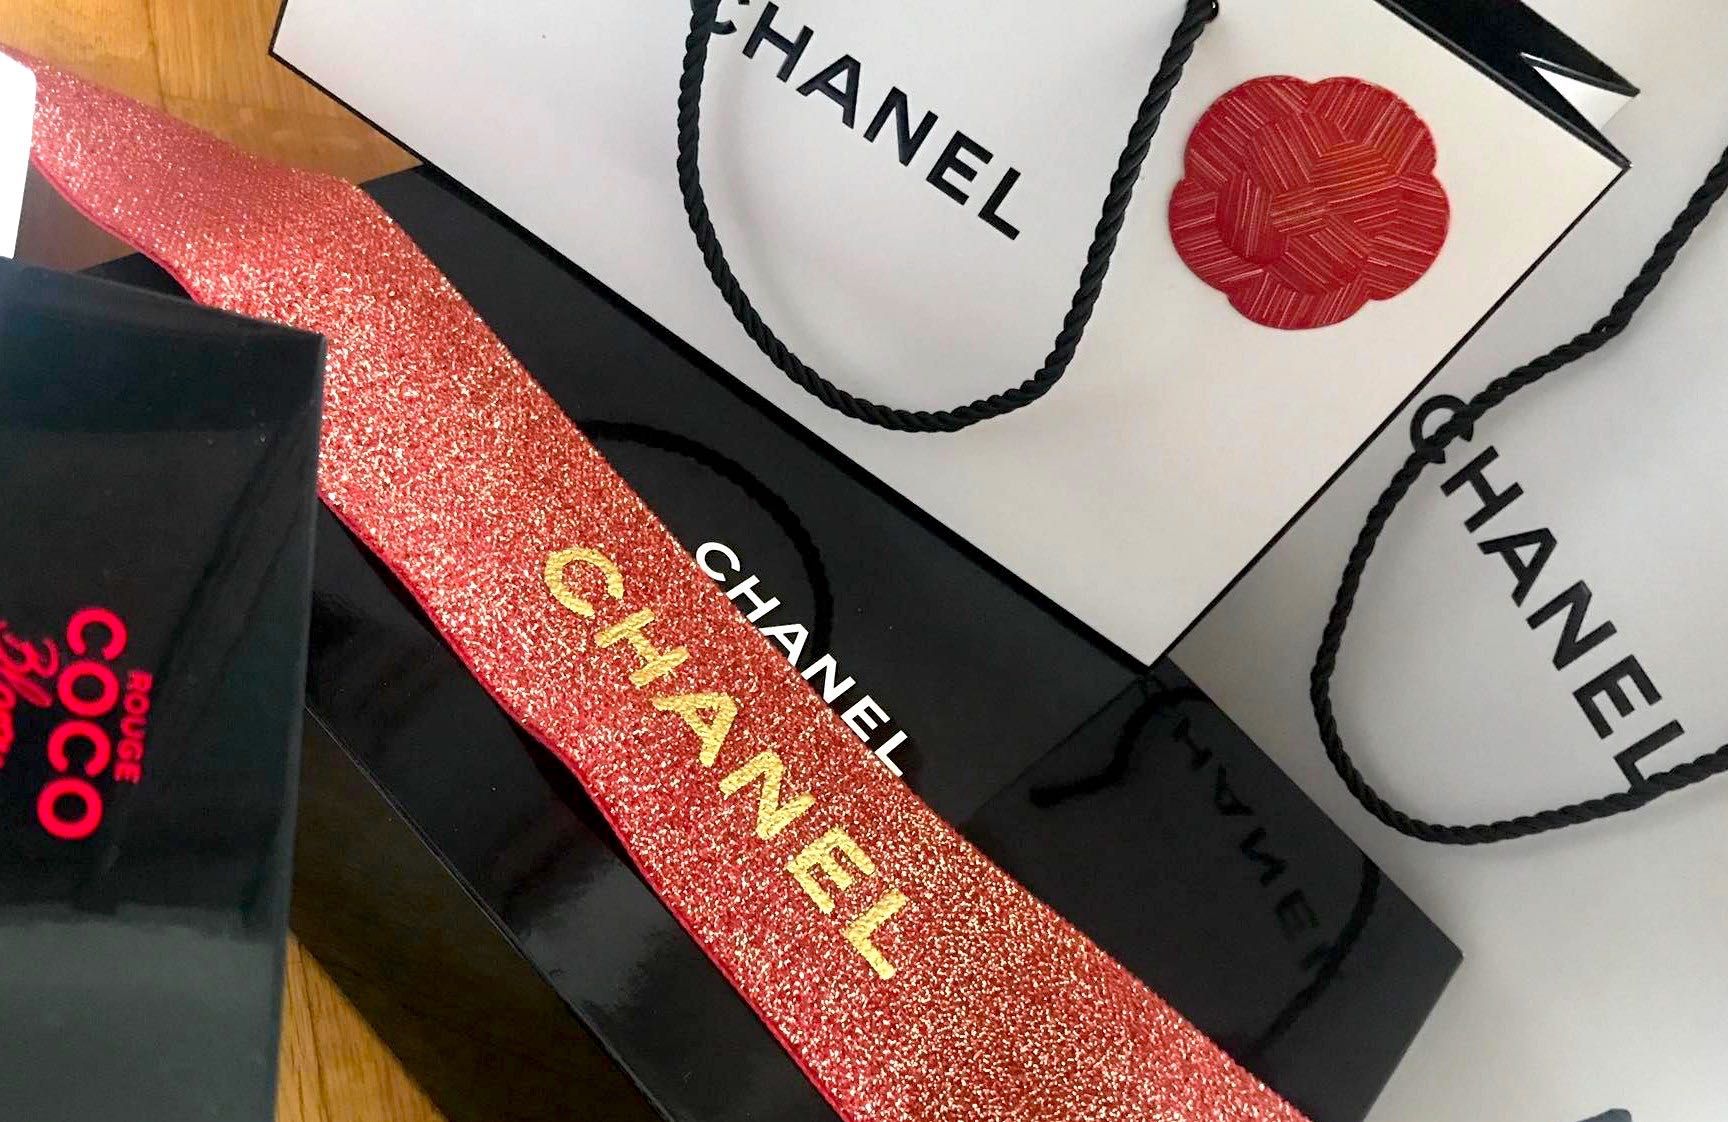 Коллекционные коробки пакеты Guerlain Chanel Гуччи Max Mara ЦУМ